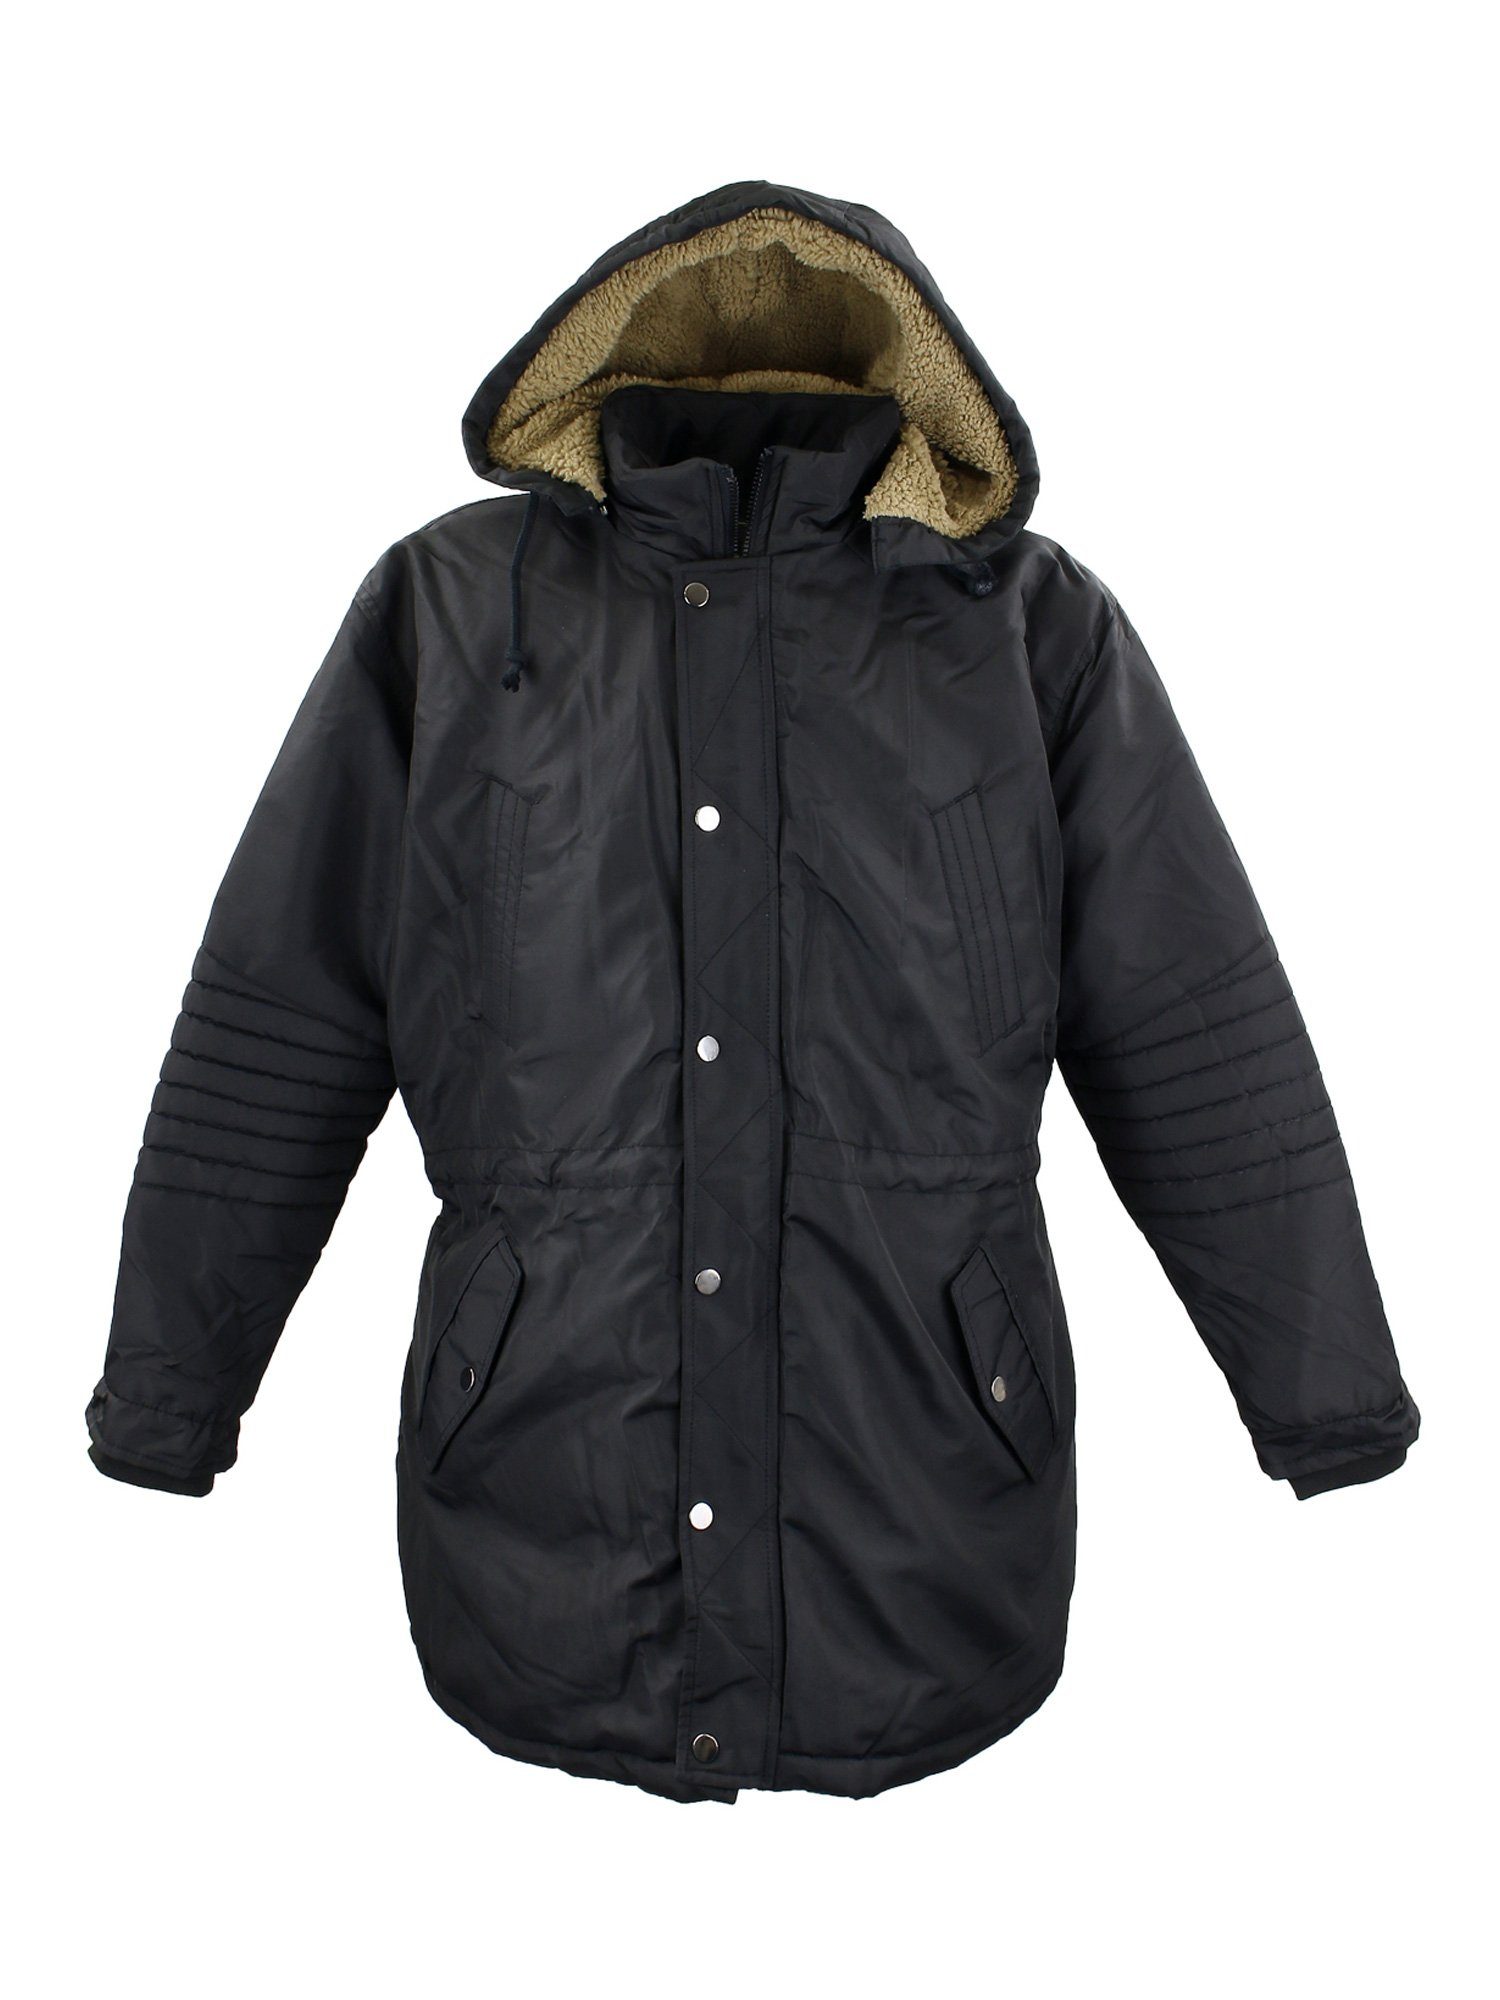 Winterjacke Übergrößen & Lavecchia schwarz LV-700 mit Kapuze abnehmbarer Jacke gefütterterter